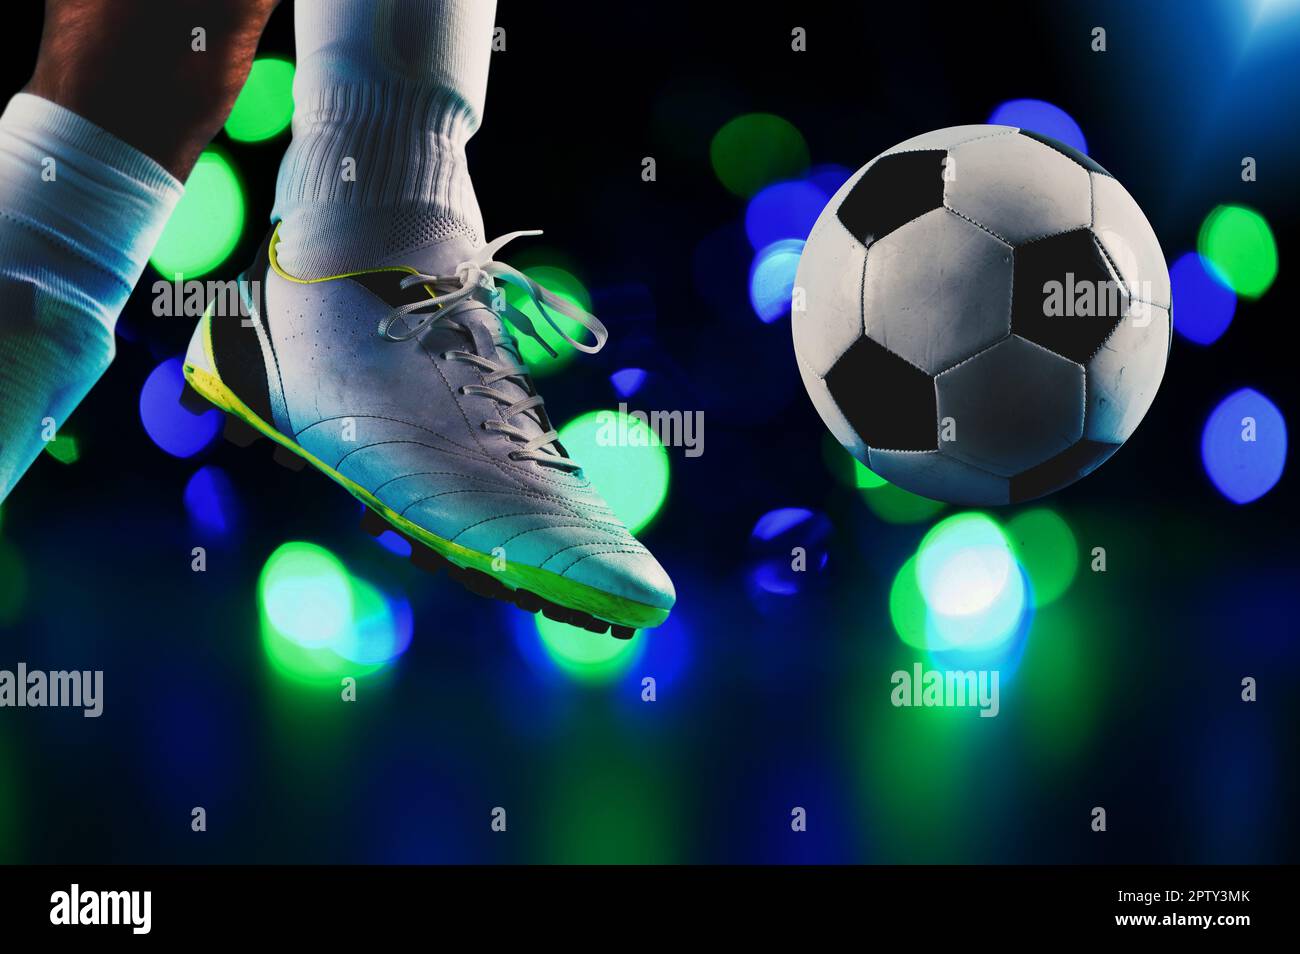 Football player ready to kicks the soccer ball Stock Photo